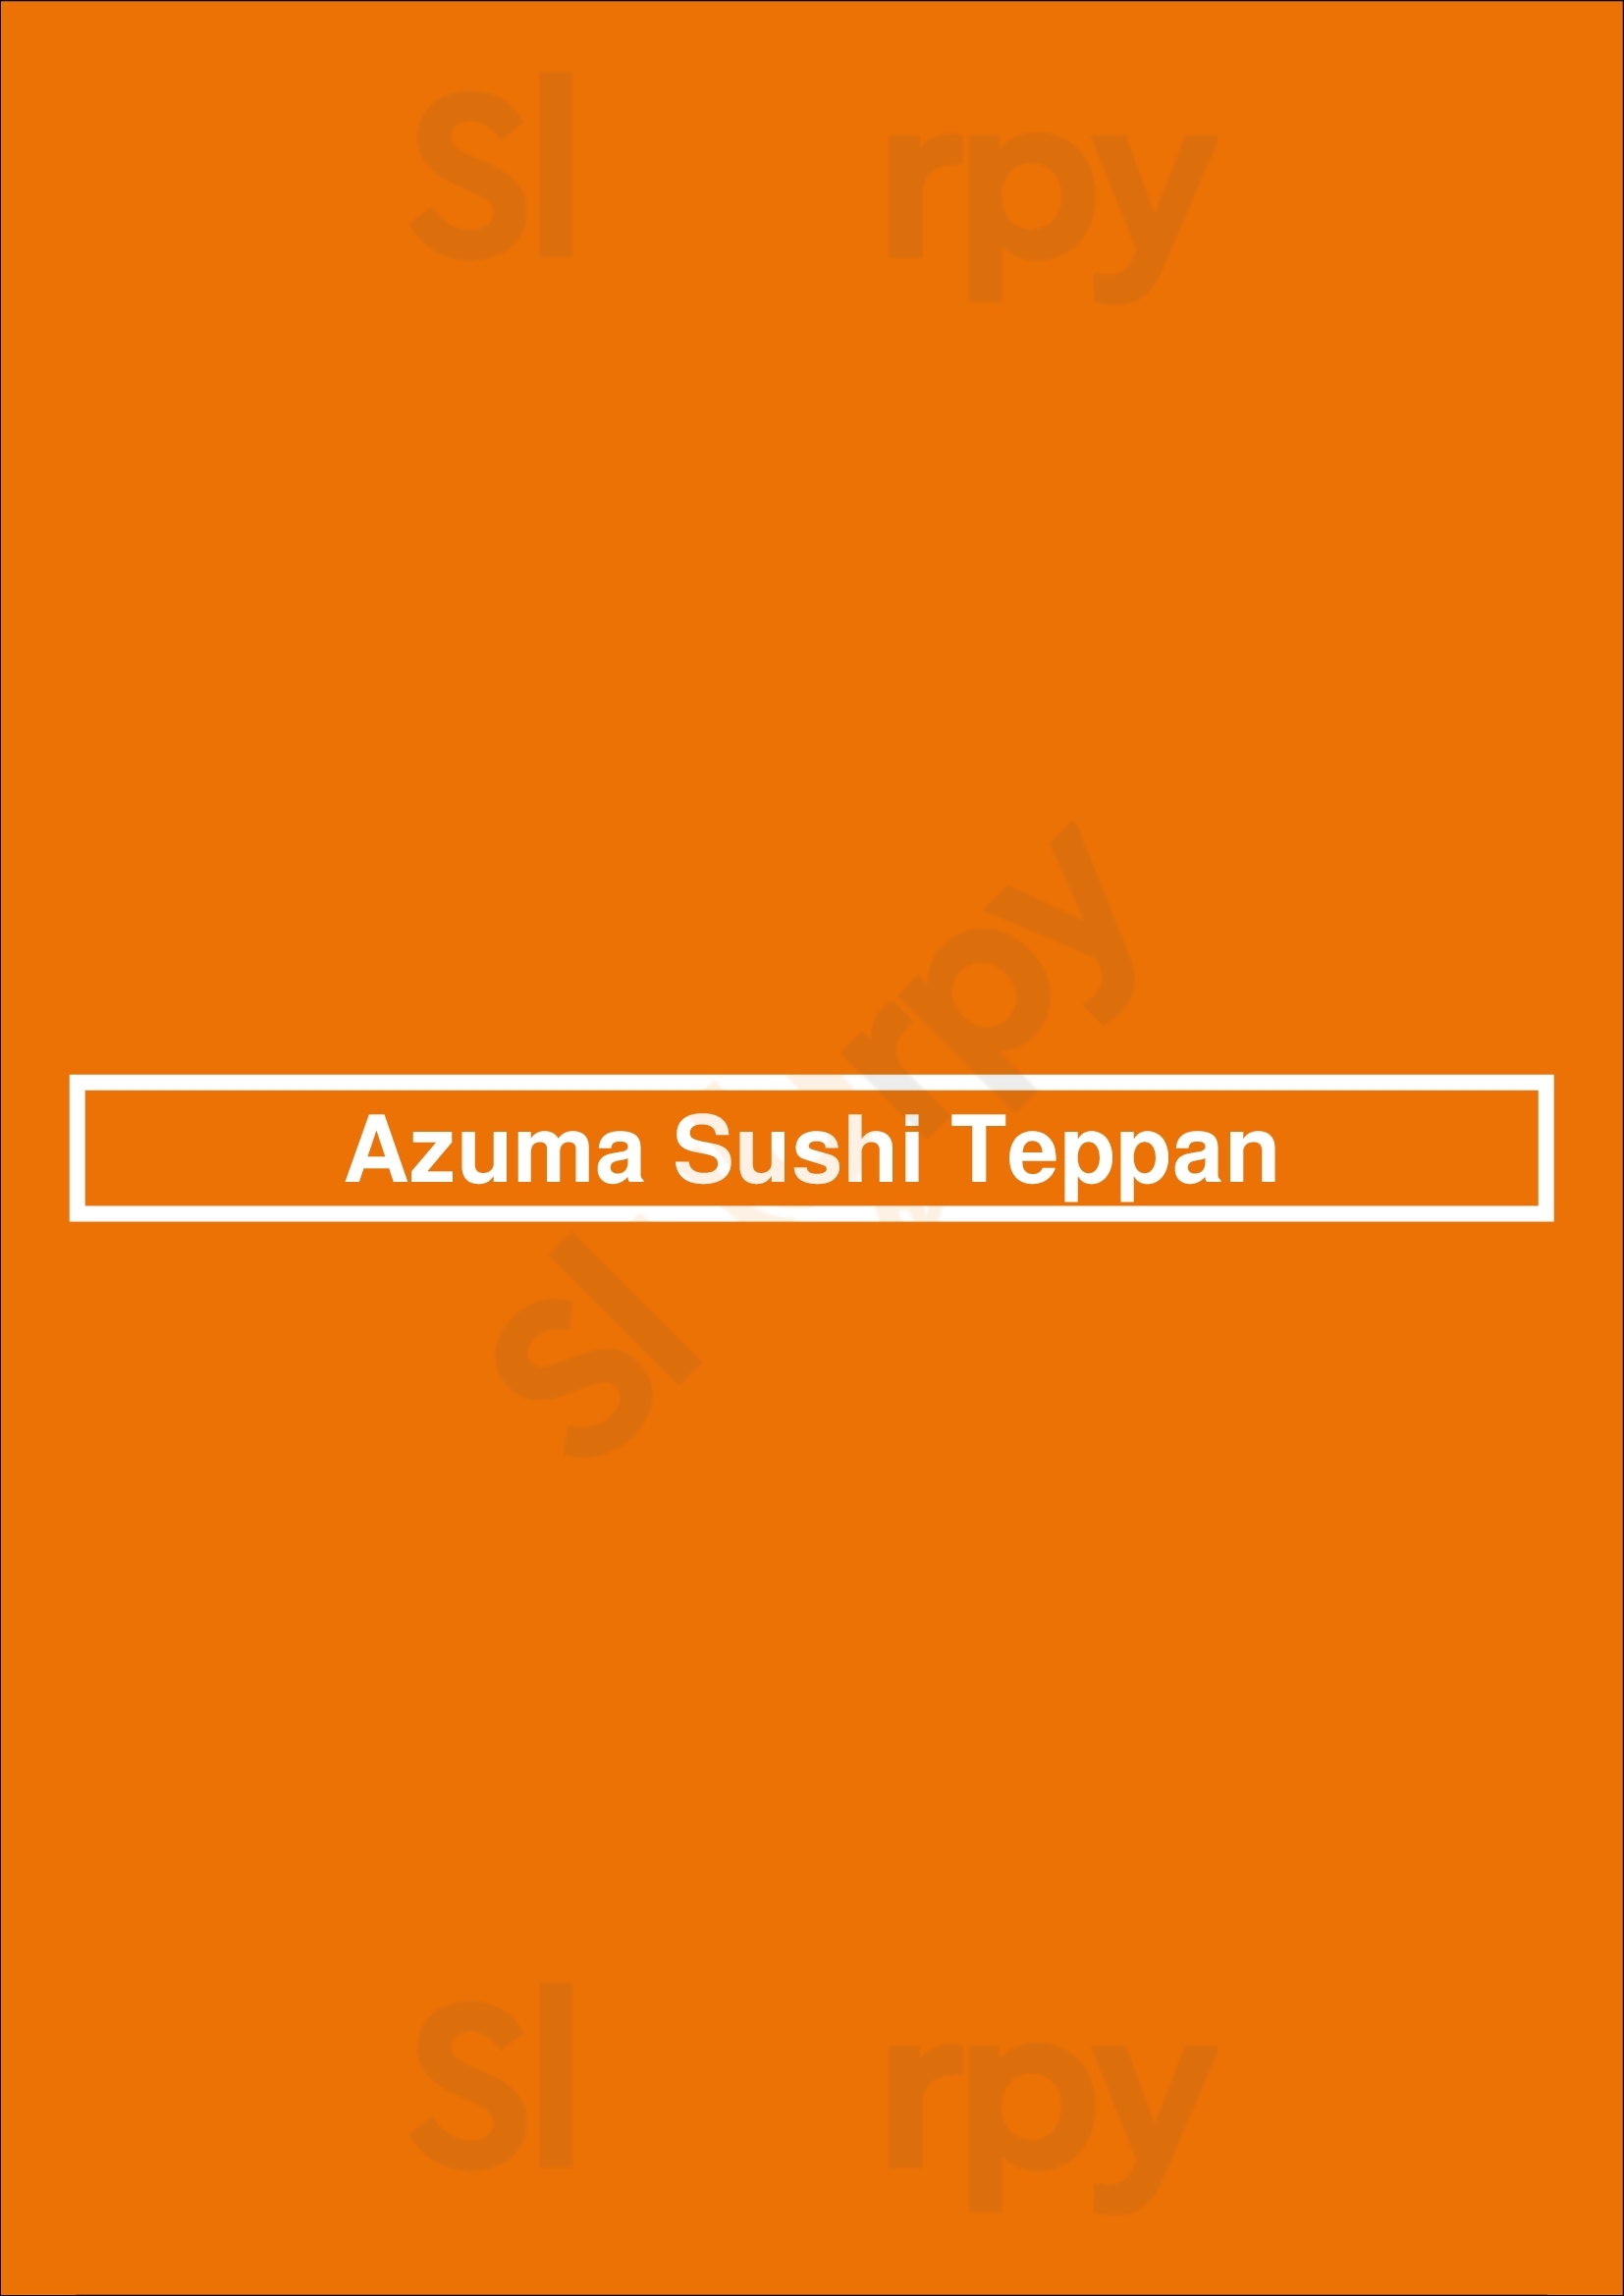 Azuma Sushi Teppan Albuquerque Menu - 1